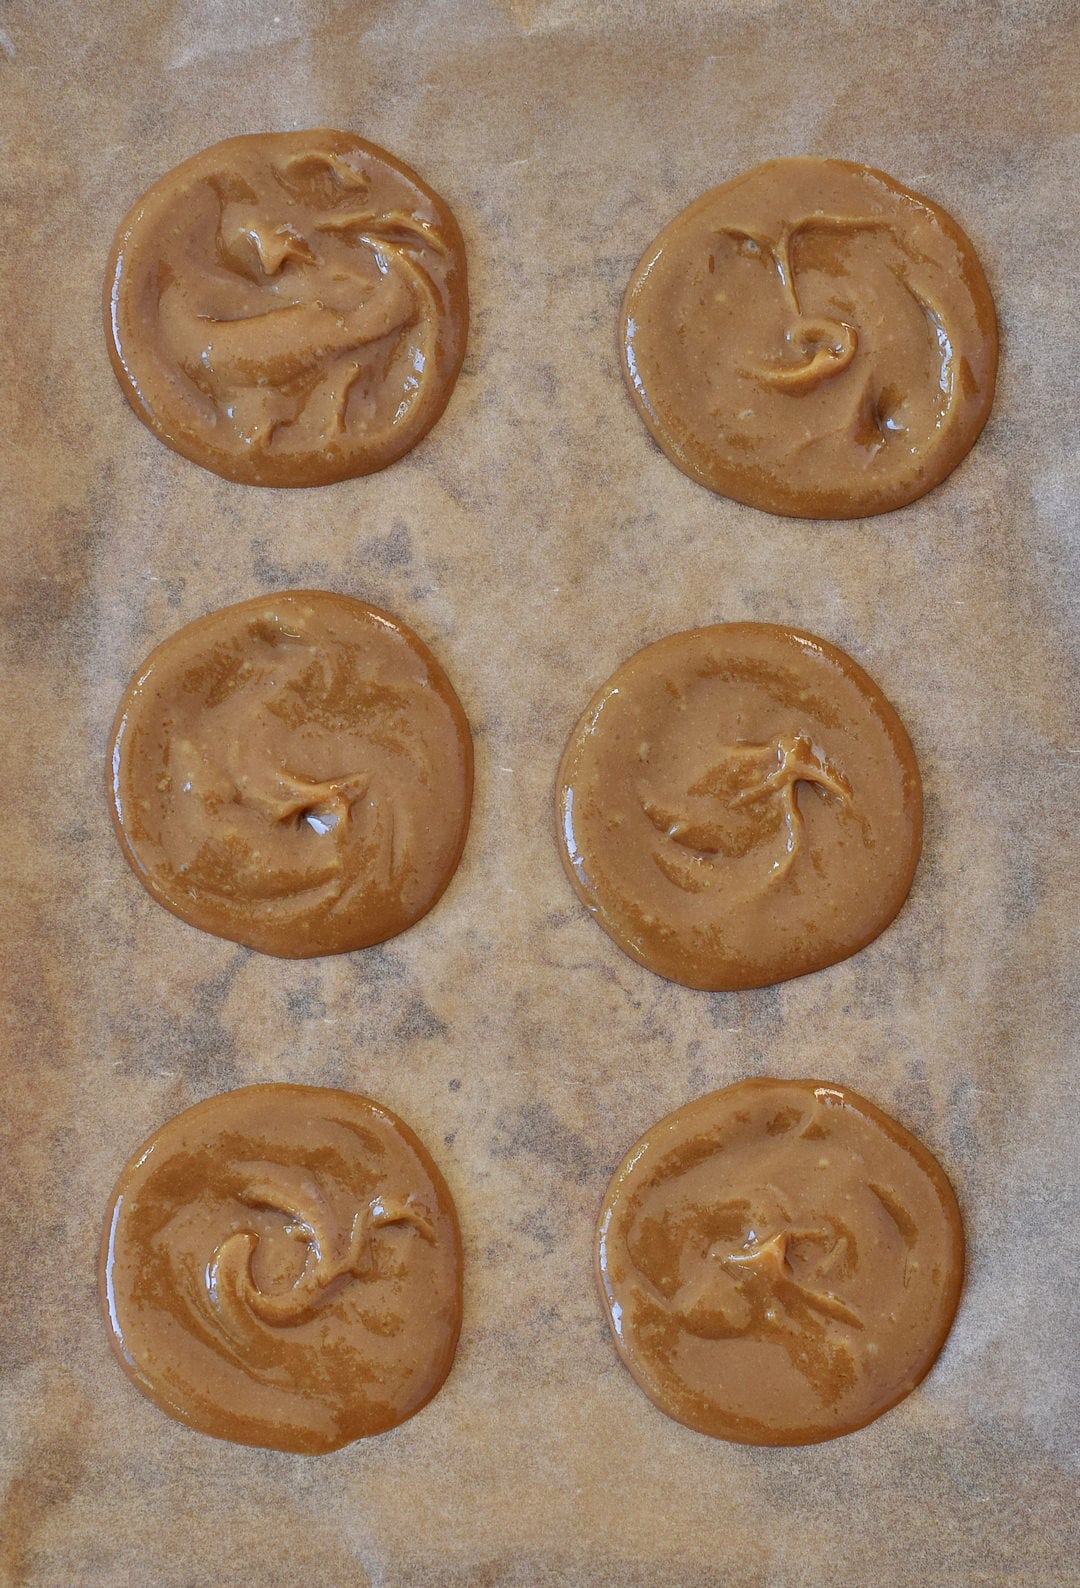 Caramel dollops to be frozen to make stuffed chocolate pancakes